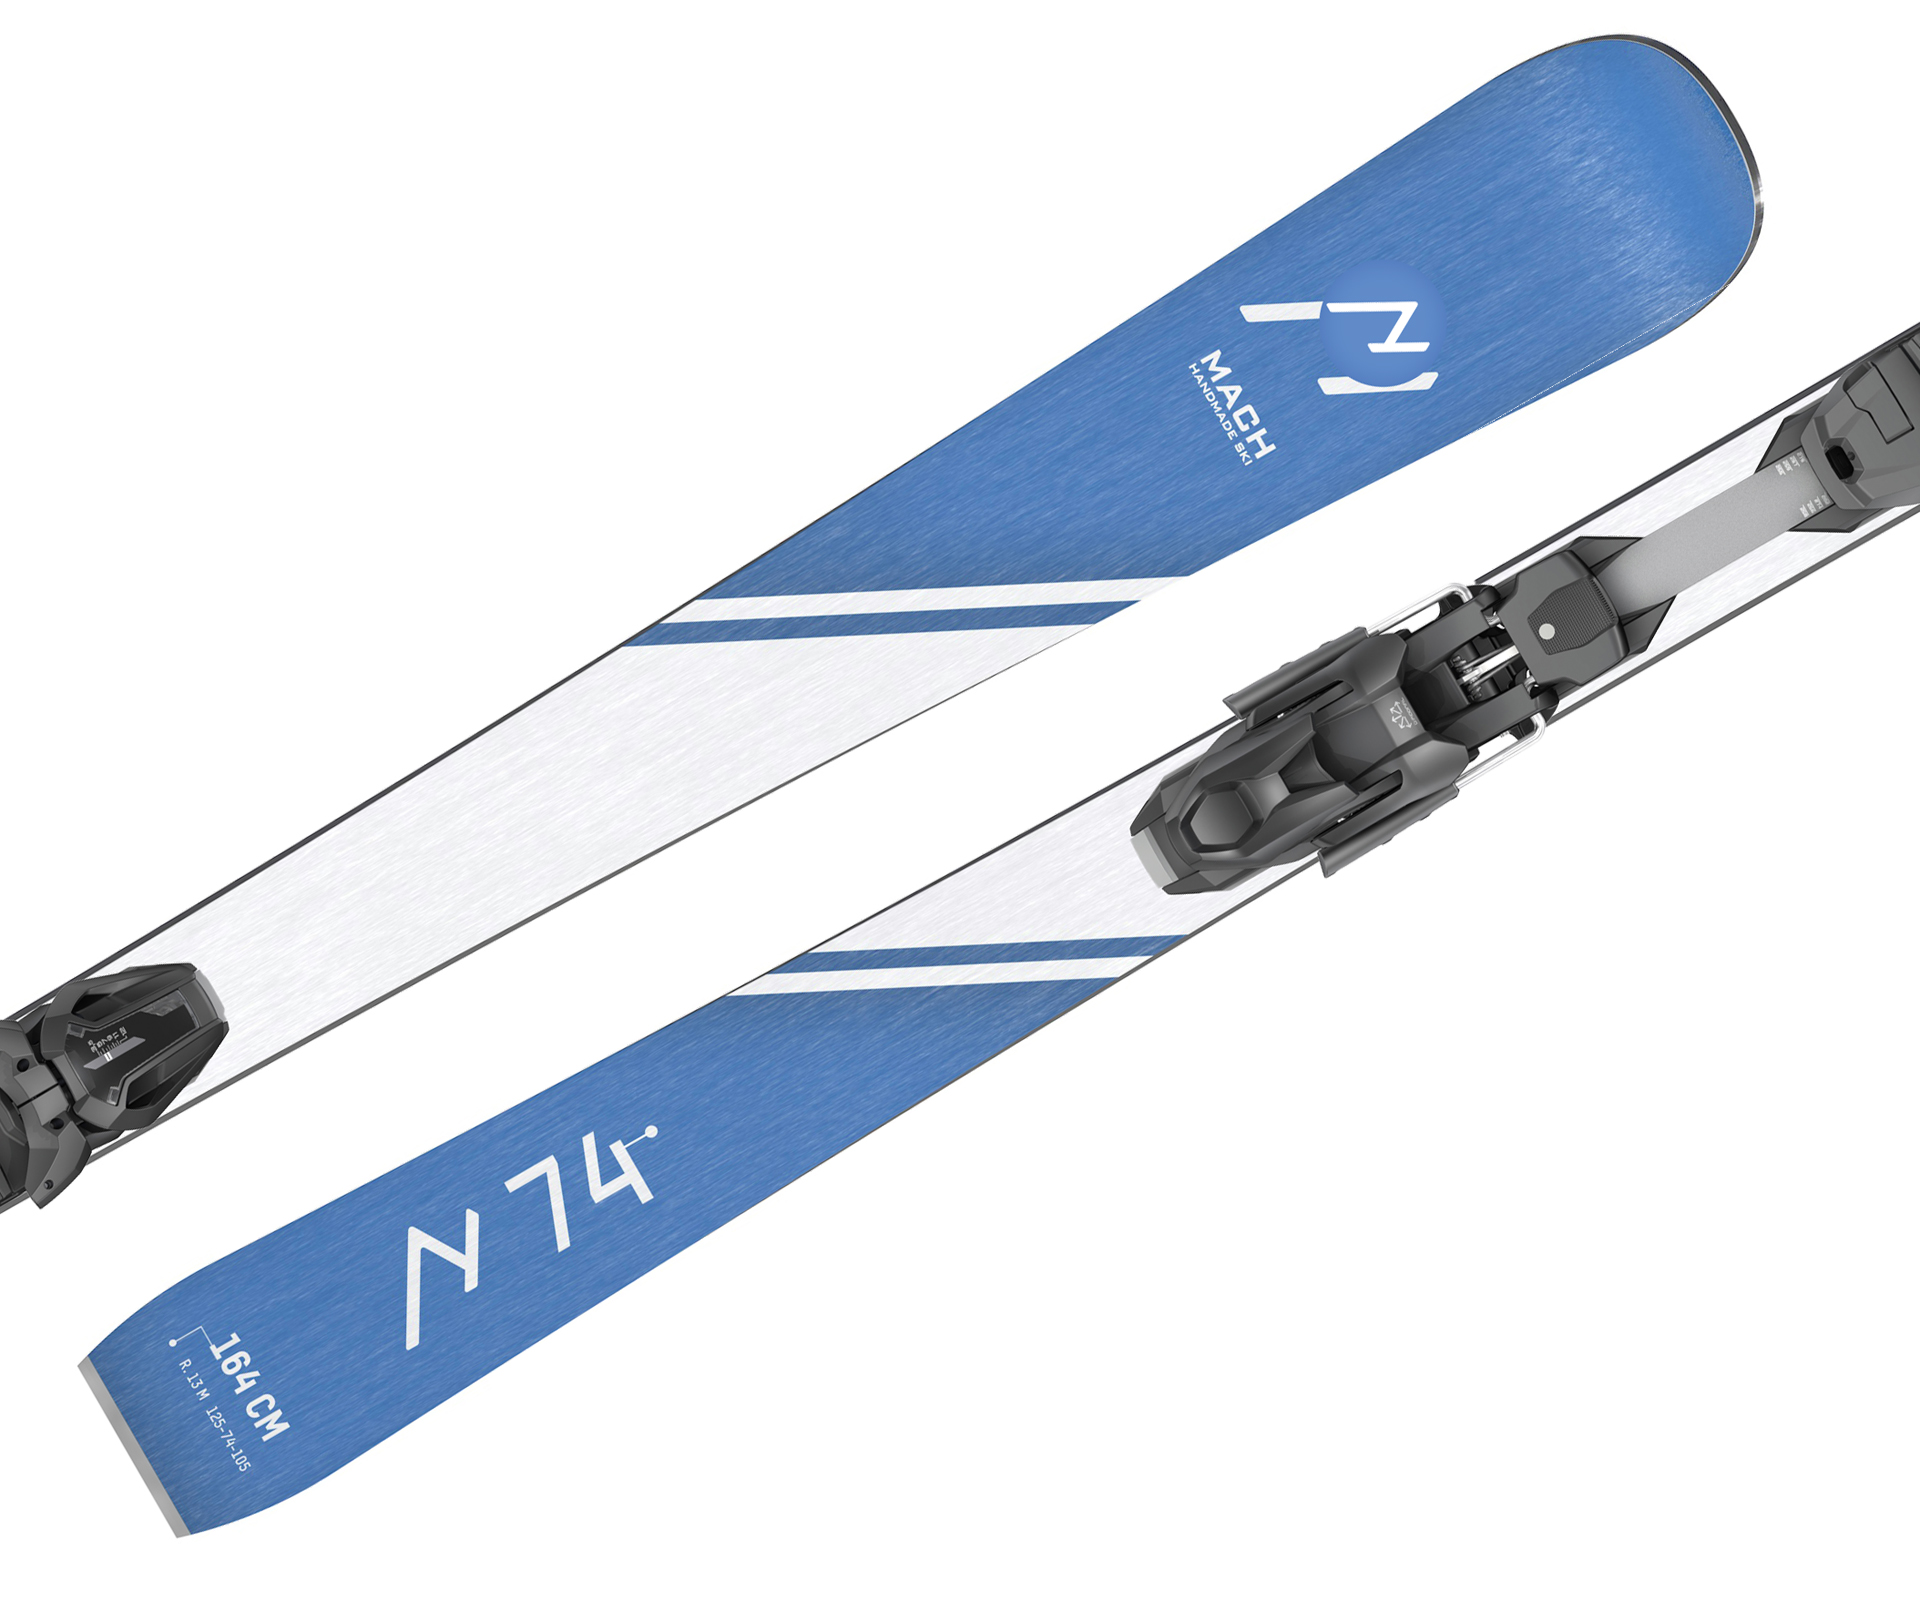 HEAD SHAPE 3.0 AB mit Bindung PR10 GW BR.85 Allrounder Ski Collection 2020 NEU 